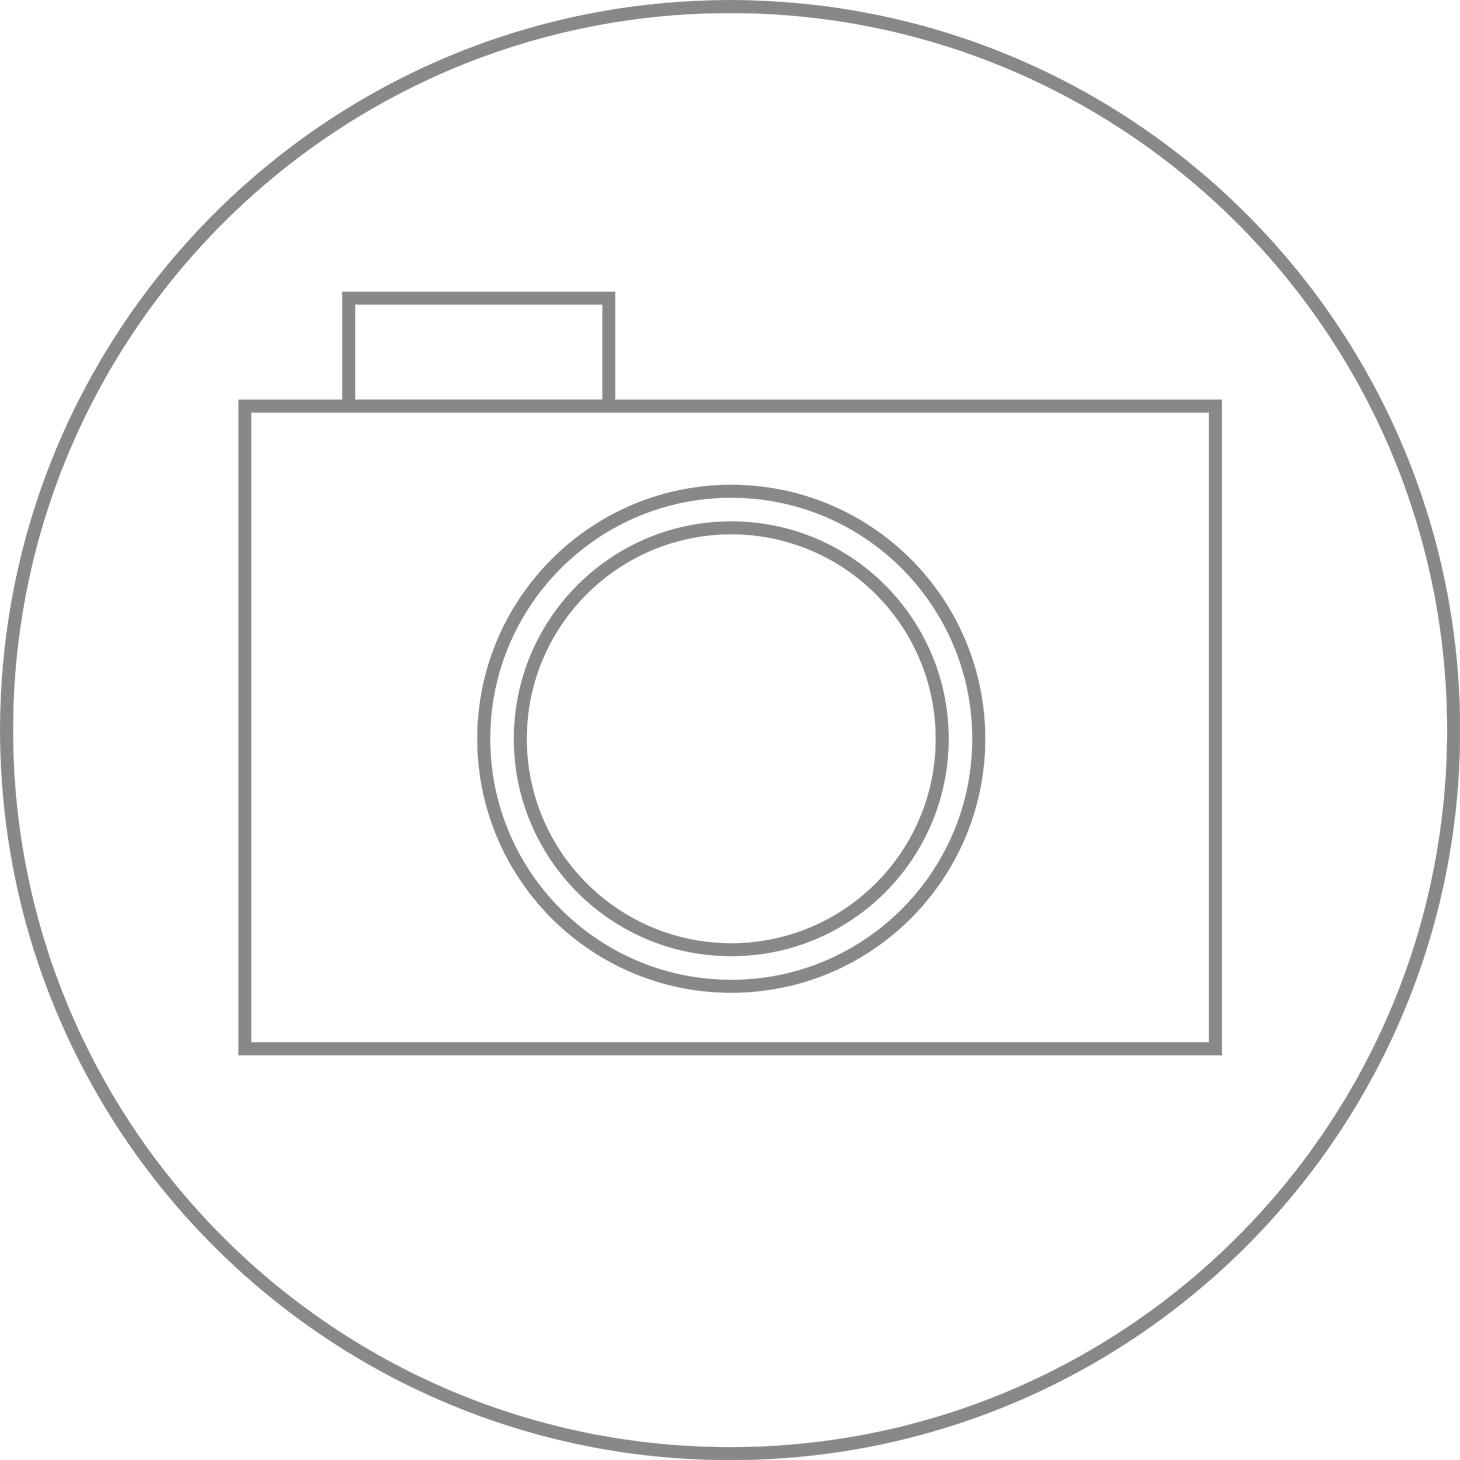 camera-logo